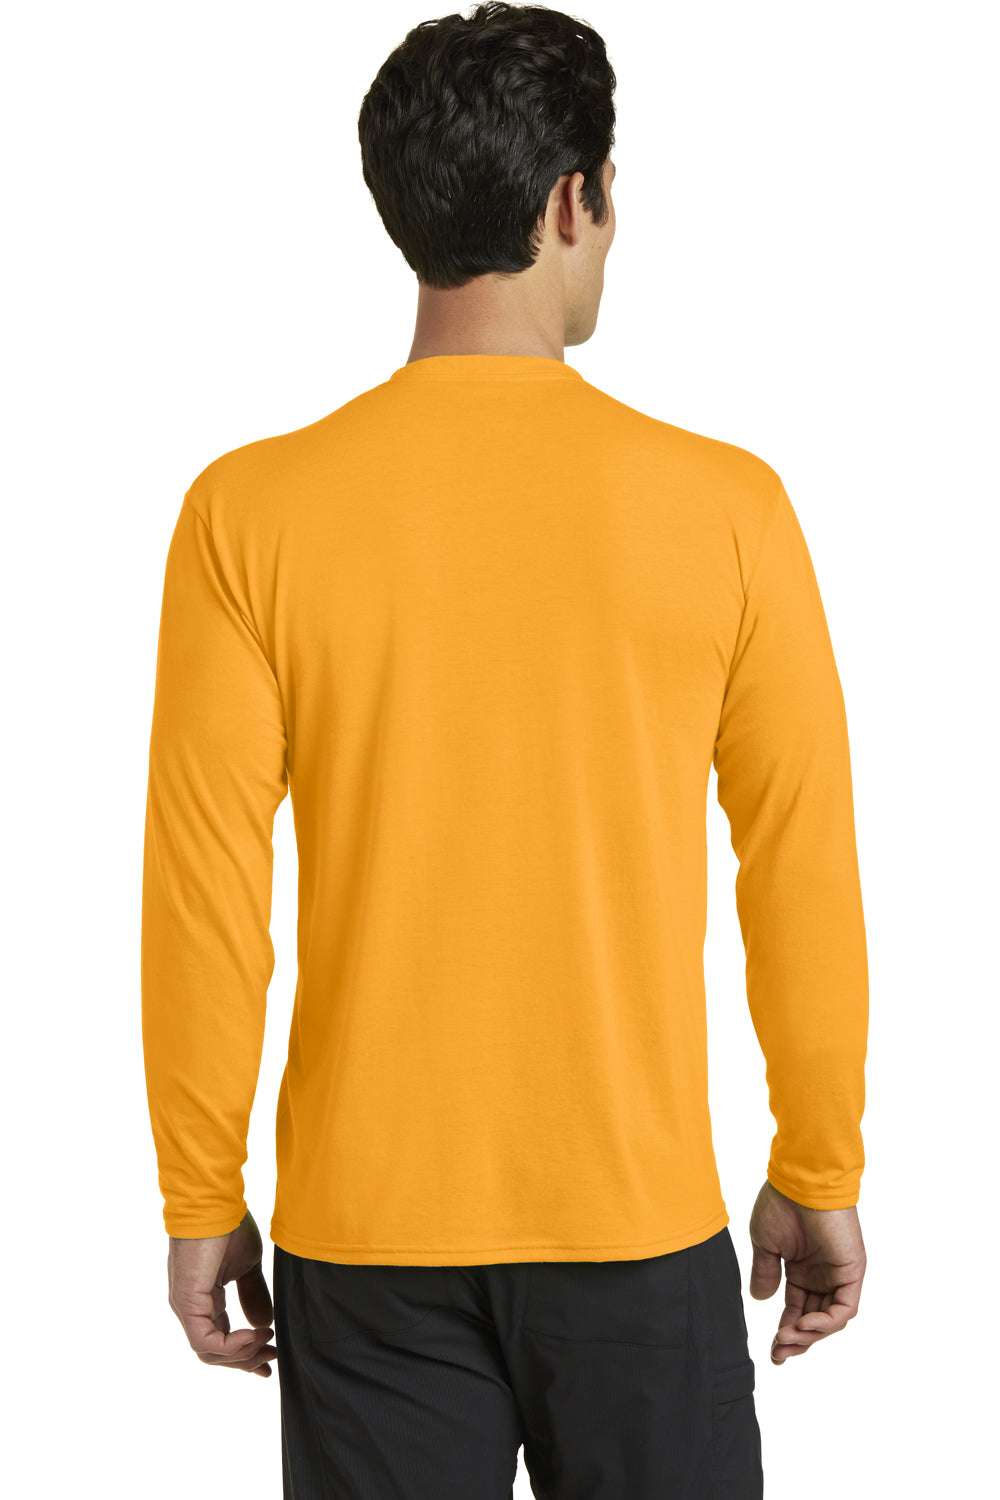 Port & Company PC381LS Mens Dry Zone Performance Moisture Wicking Long Sleeve Crewneck T-Shirt Gold Back